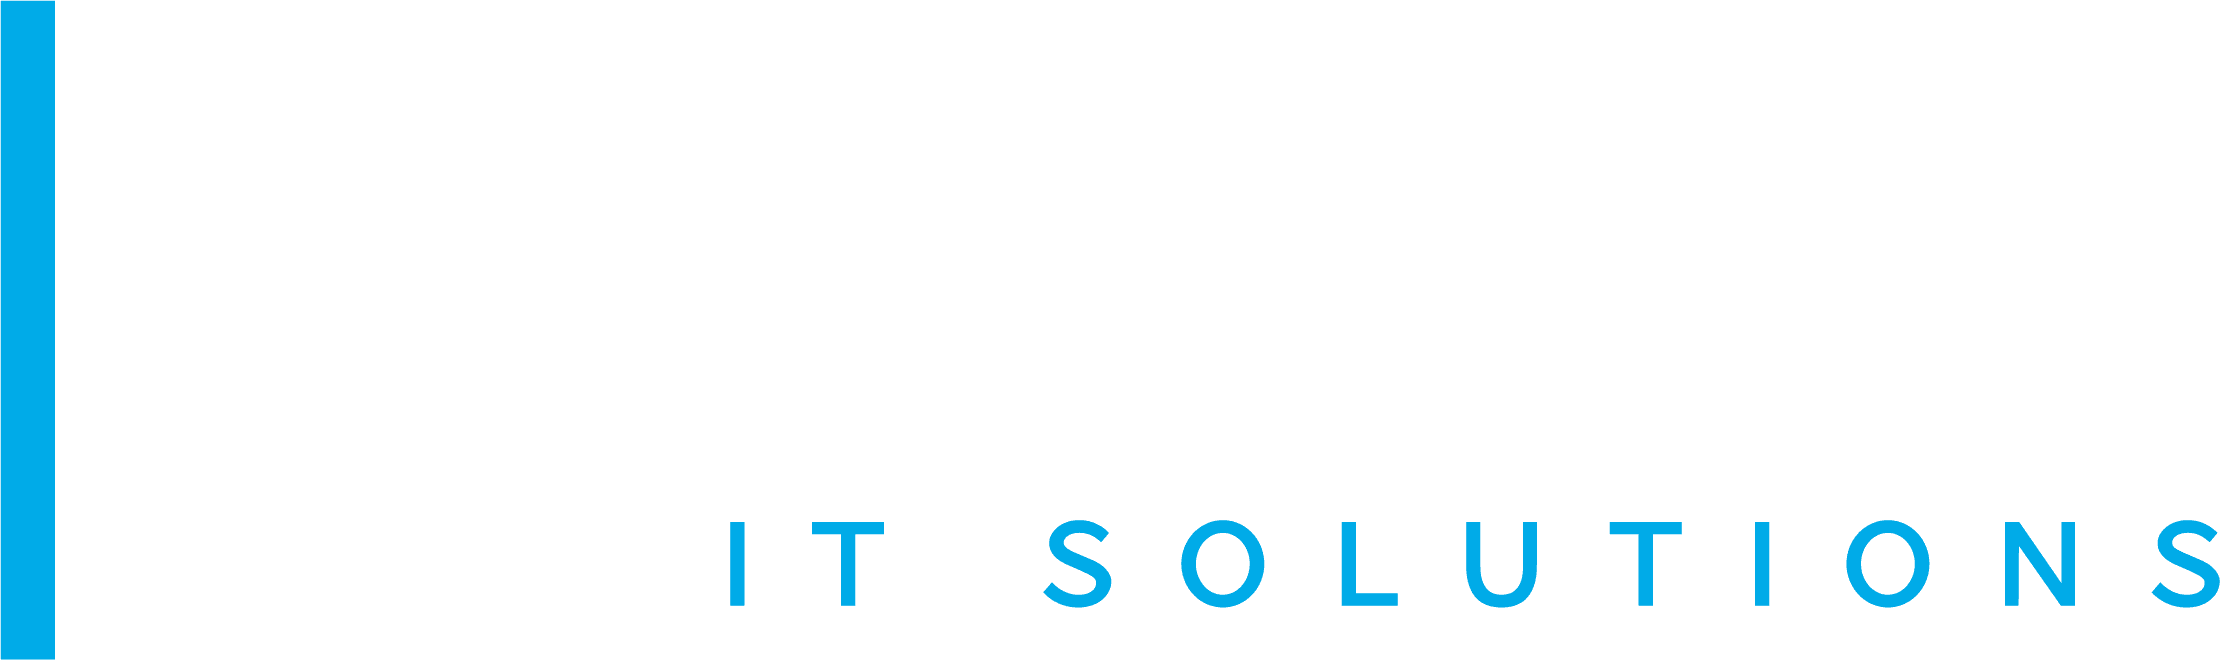 IT Solutions by Truedata